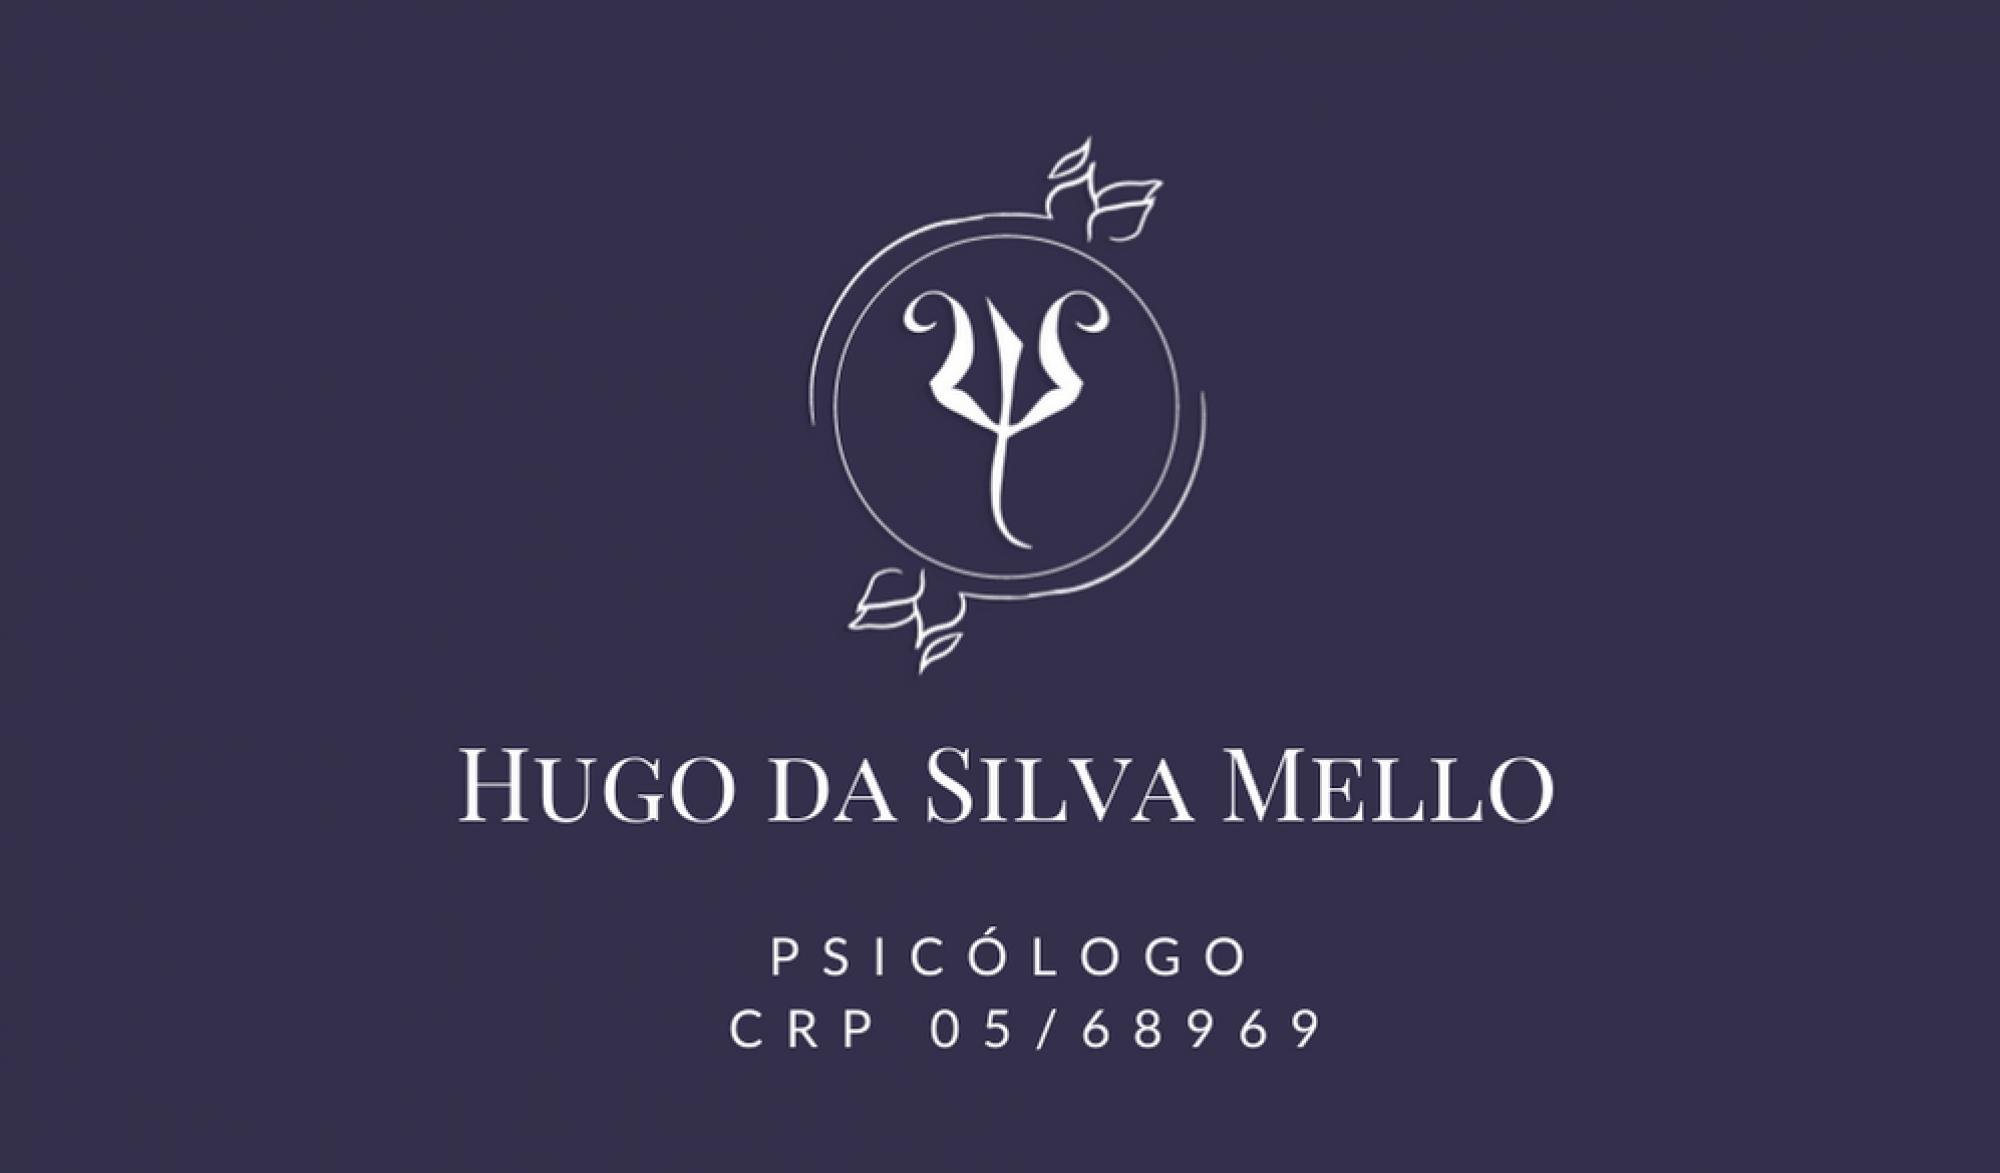 Foto de capa Hugo da Silva Mello